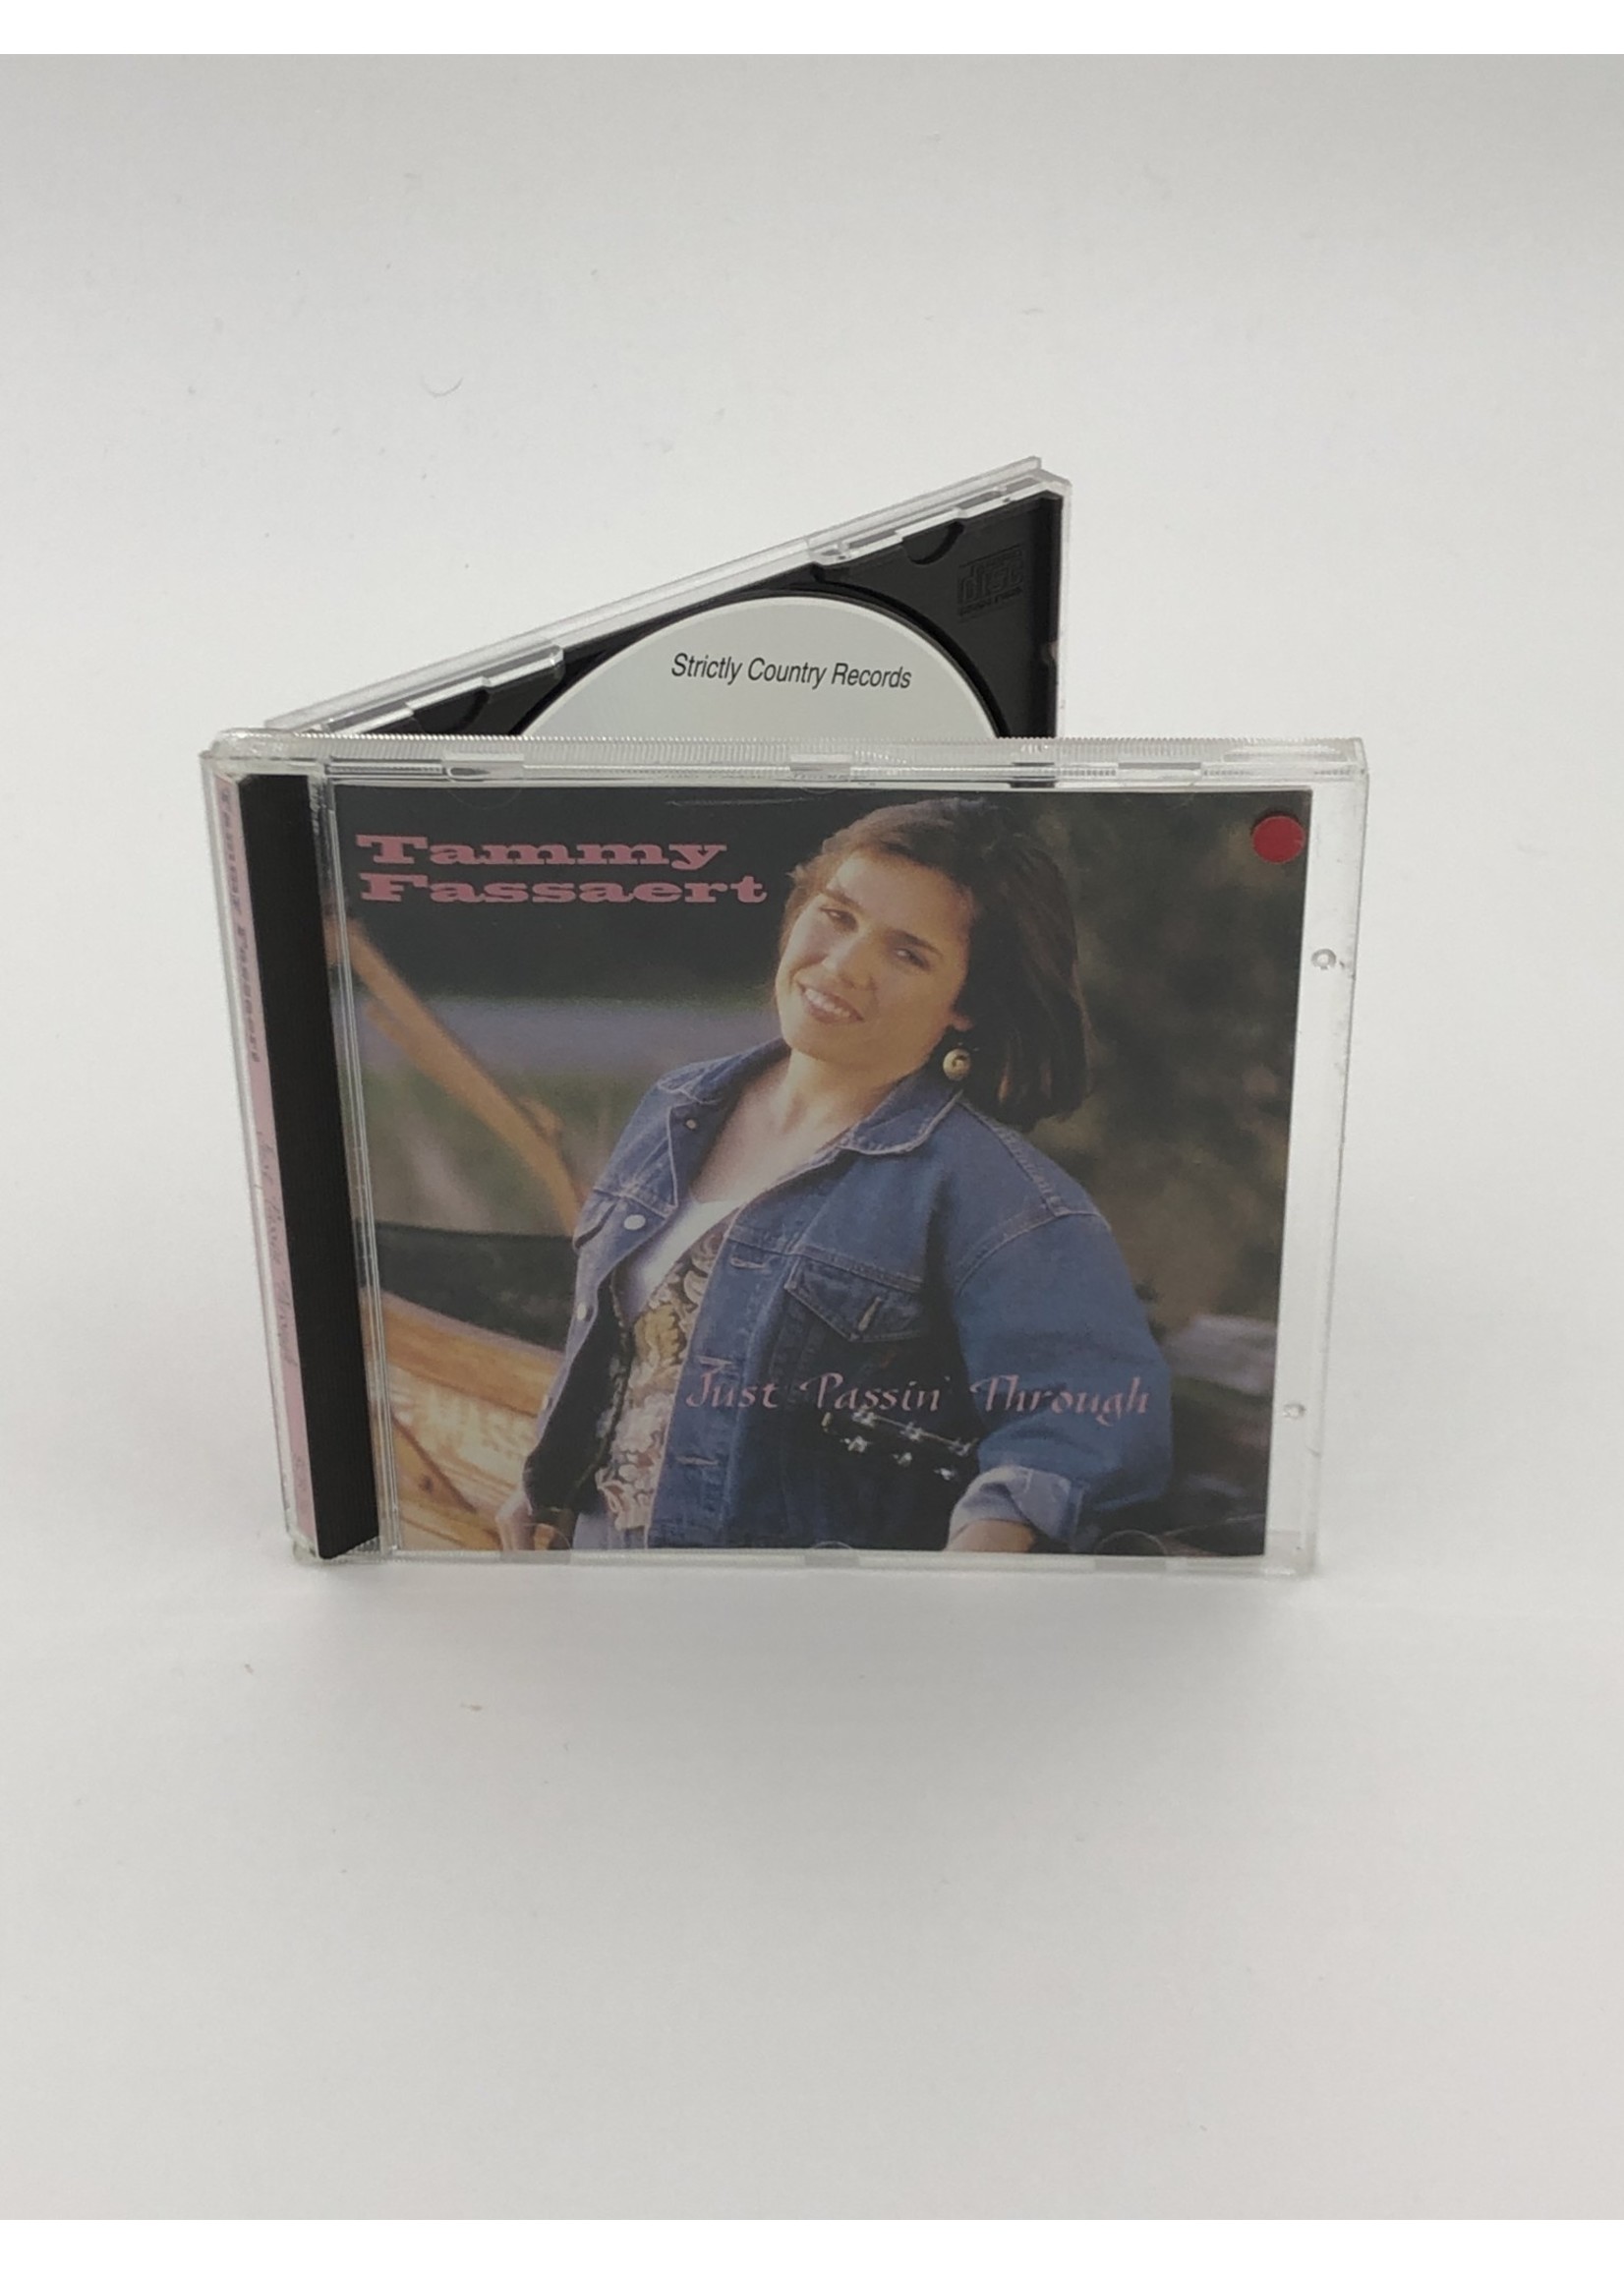 CD Tammy Fassaert: Just Passin Through CD